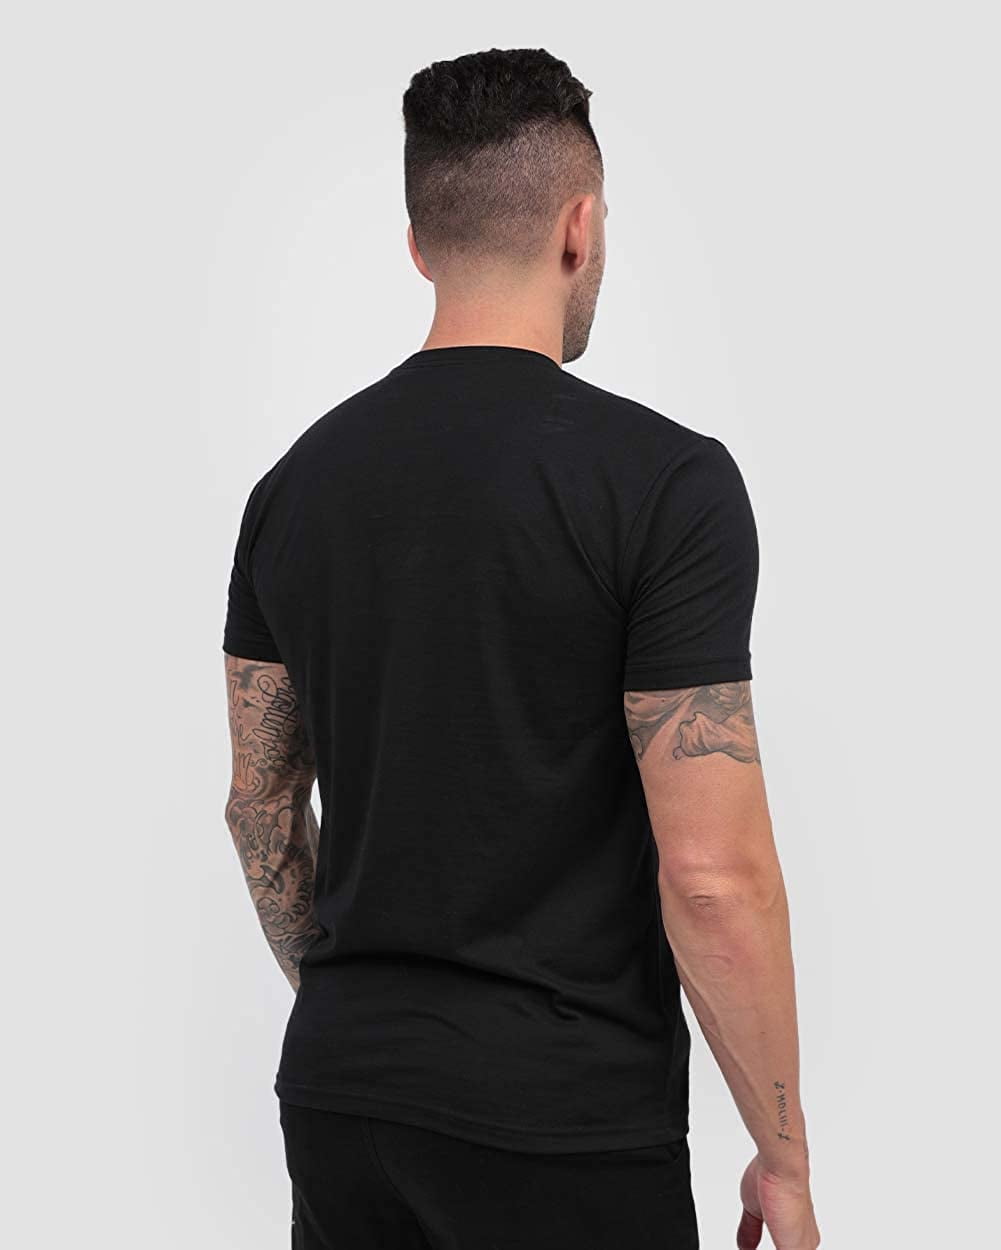  AUTUOMAN Astros T Shirts for Men Graphic Mens Black